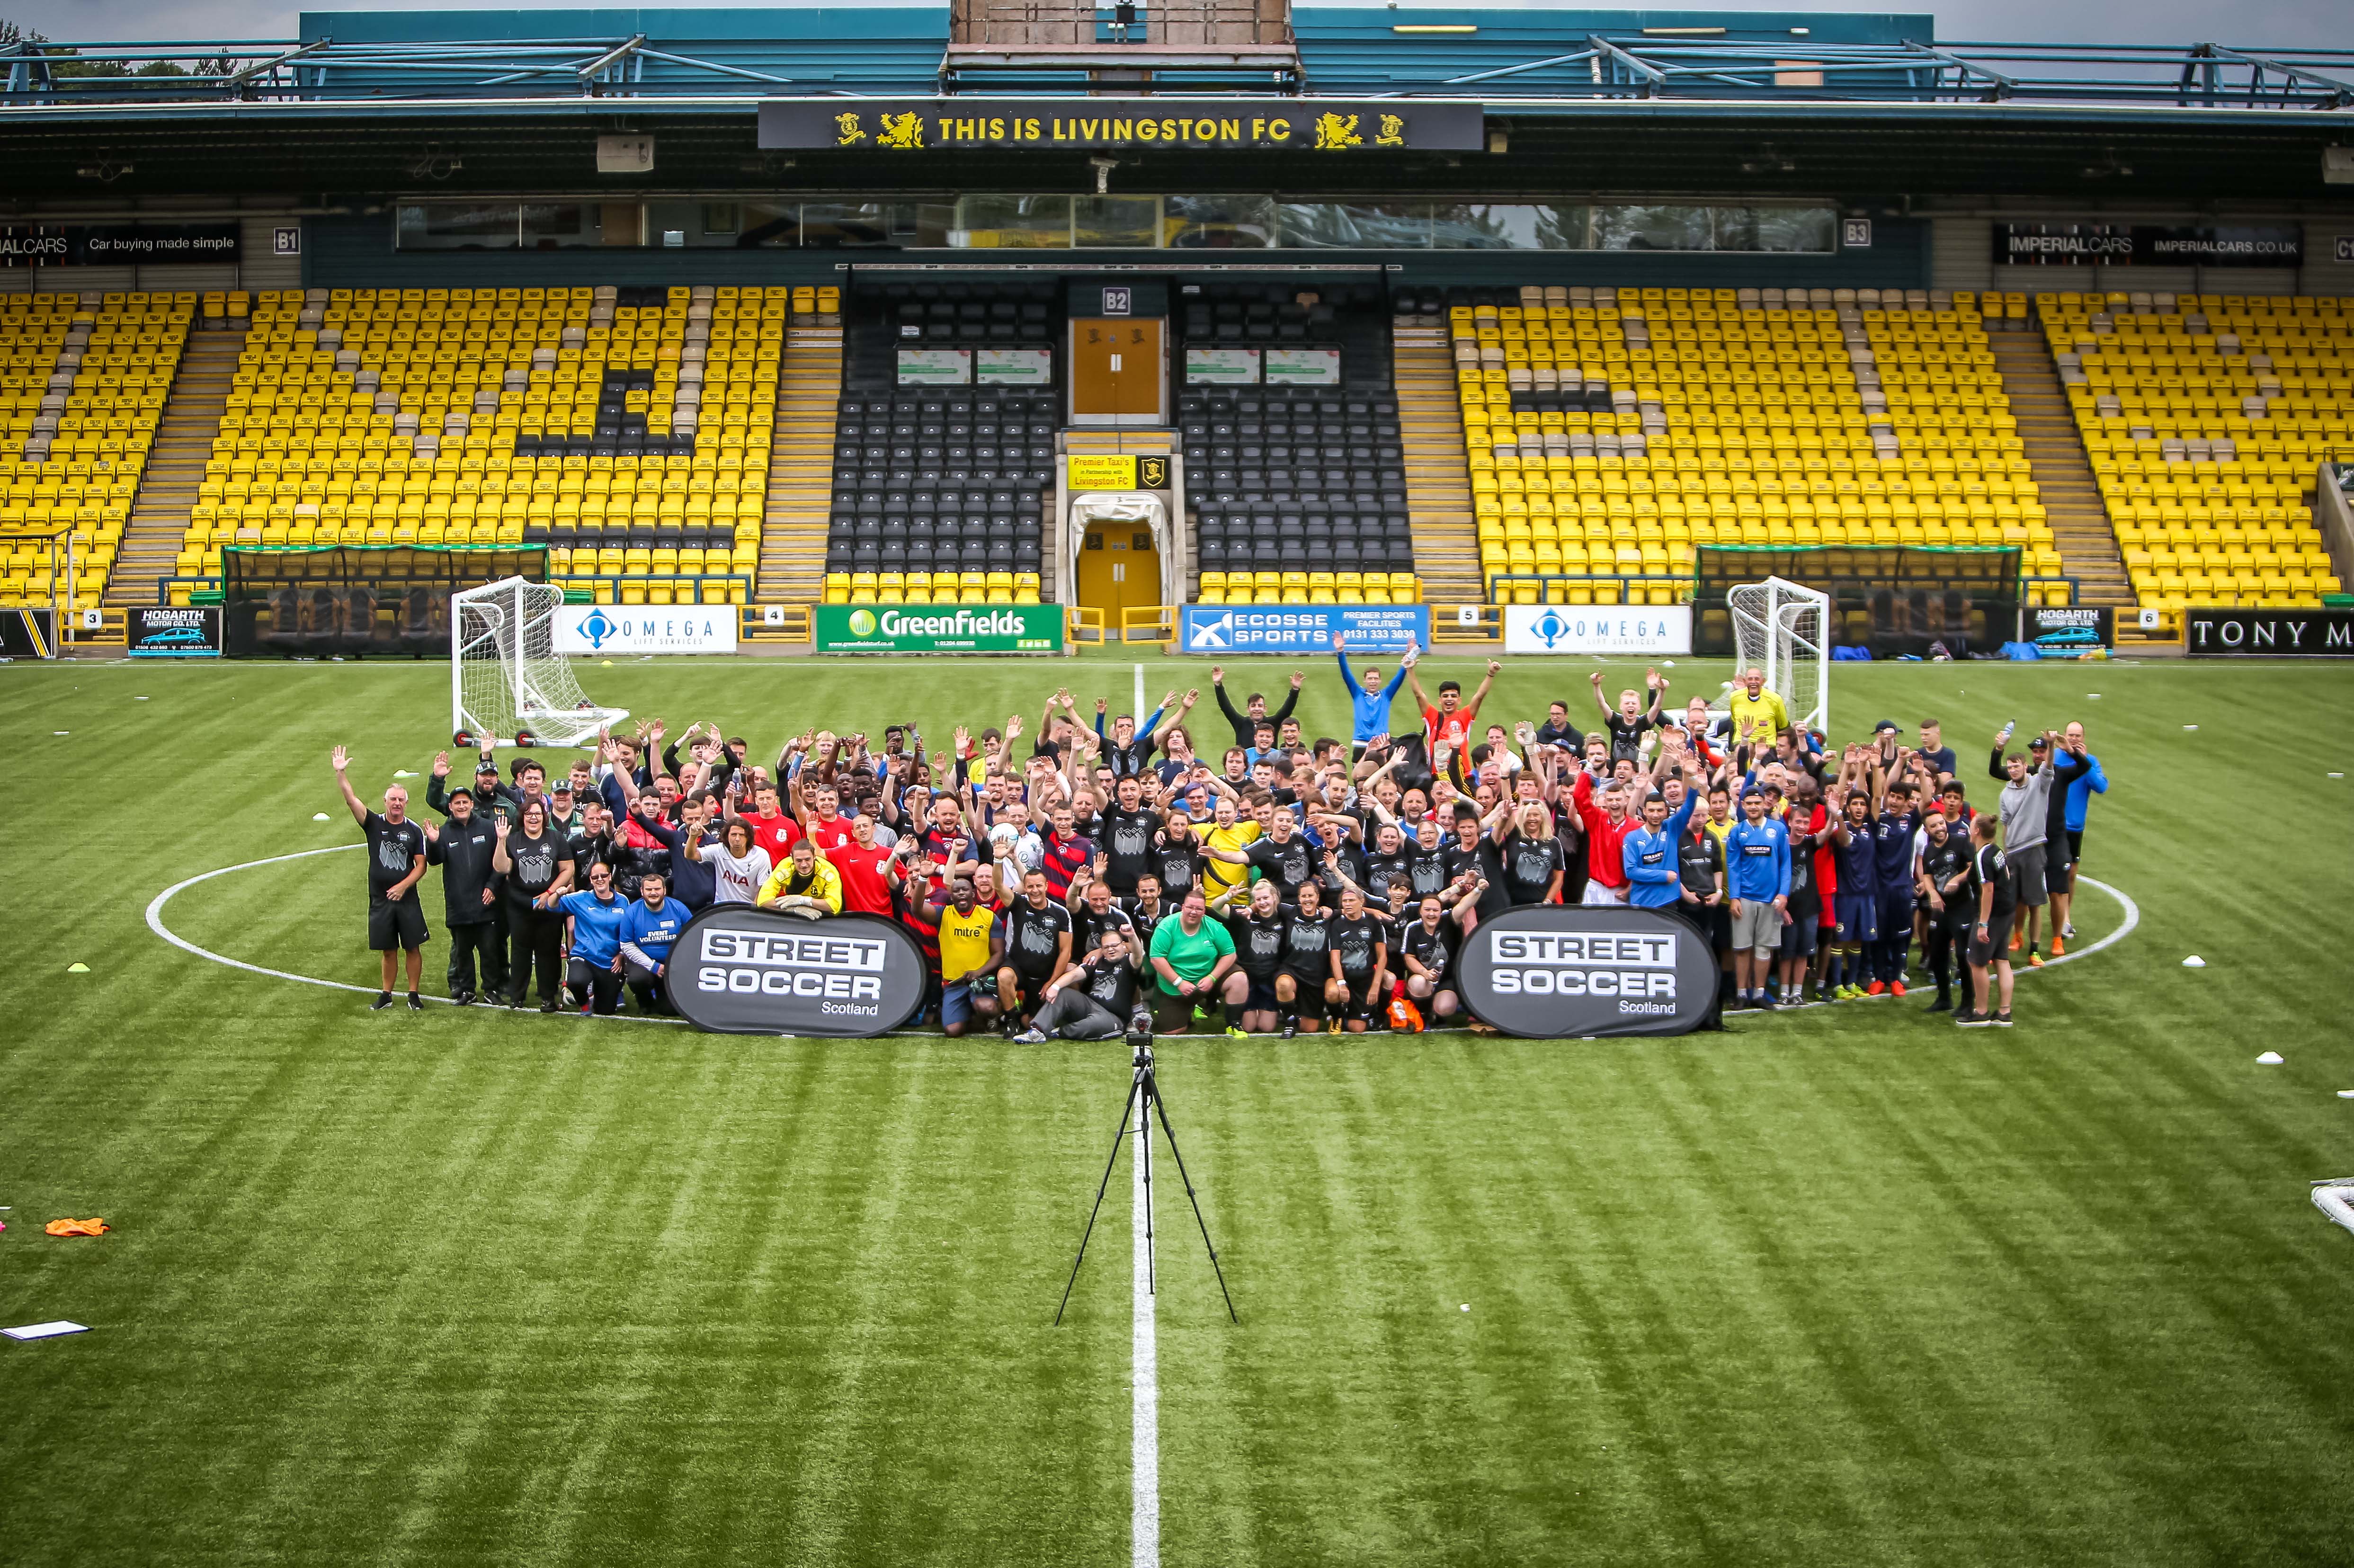 Street Soccer Scotland wins regional stage of Barclays’ Entrepreneur Awards